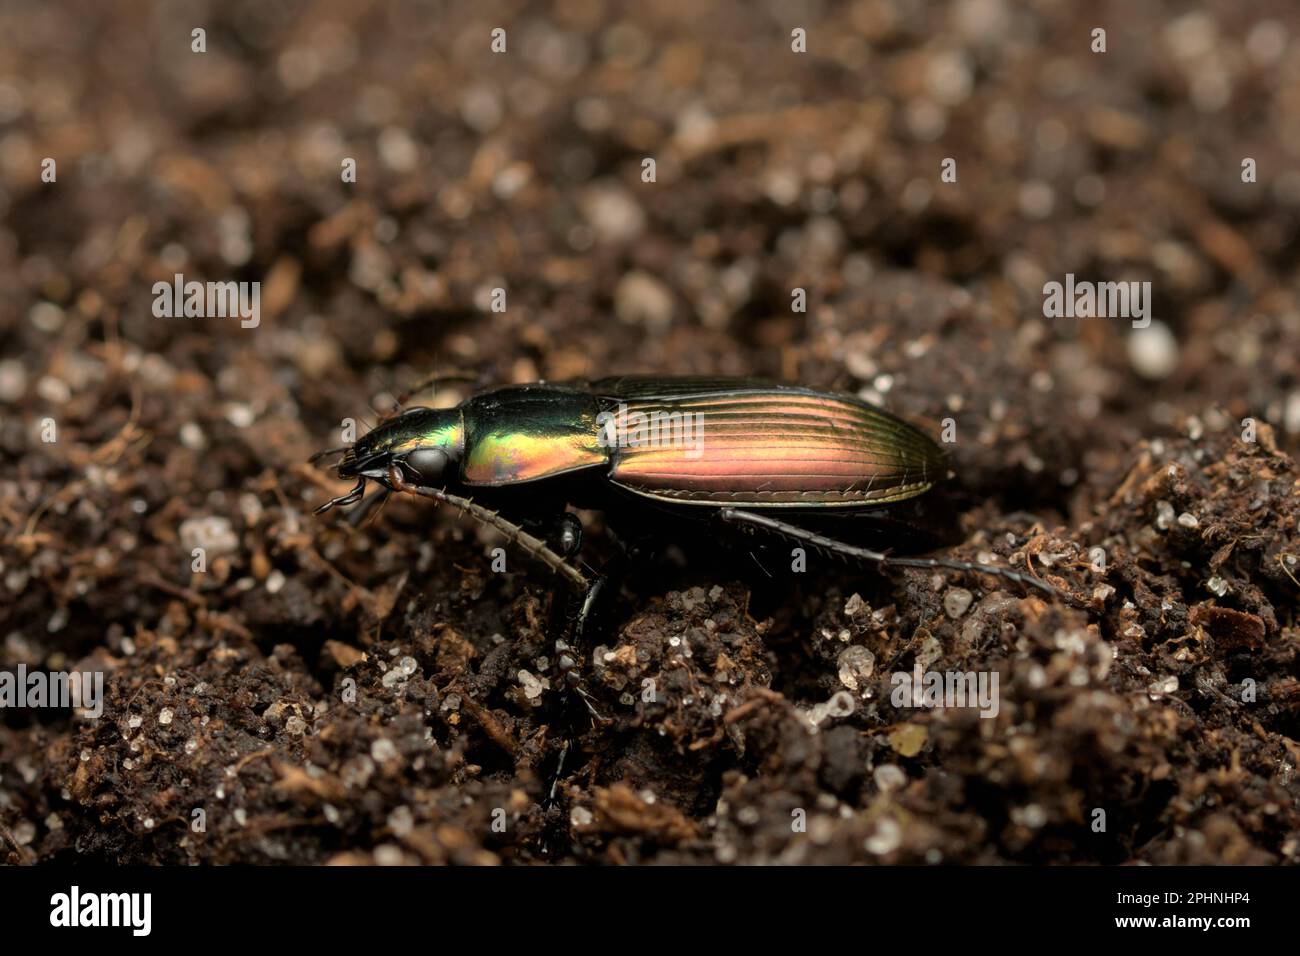 A male groundbeetle (Poecilus versicolor) on soil, shiny, metallic, macro photography, insects Stock Photo